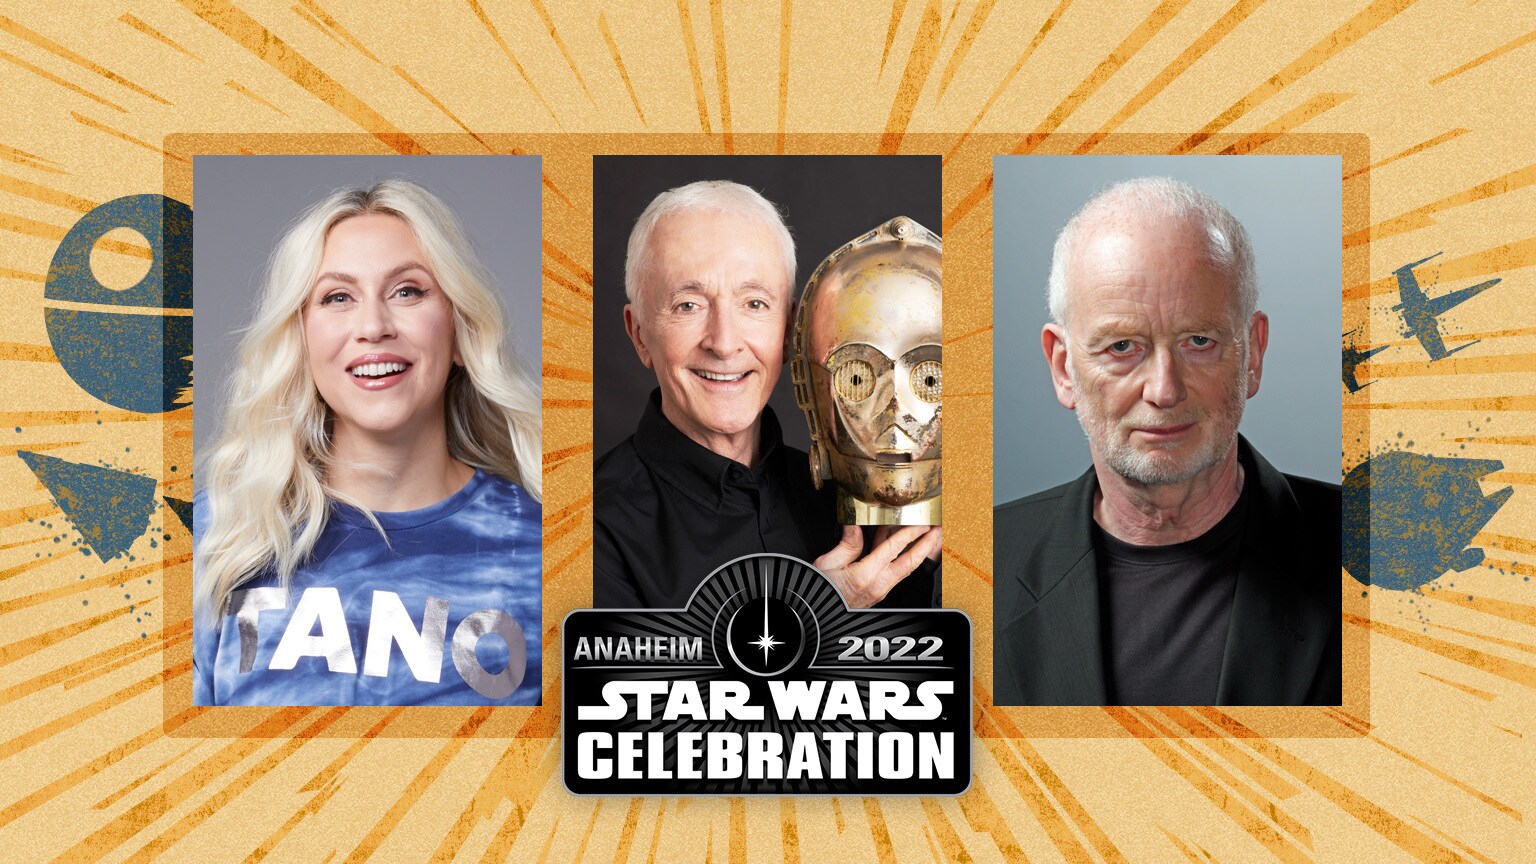 Star Wars Celebration Anaheim 2022 Announces First Celebrity Guests